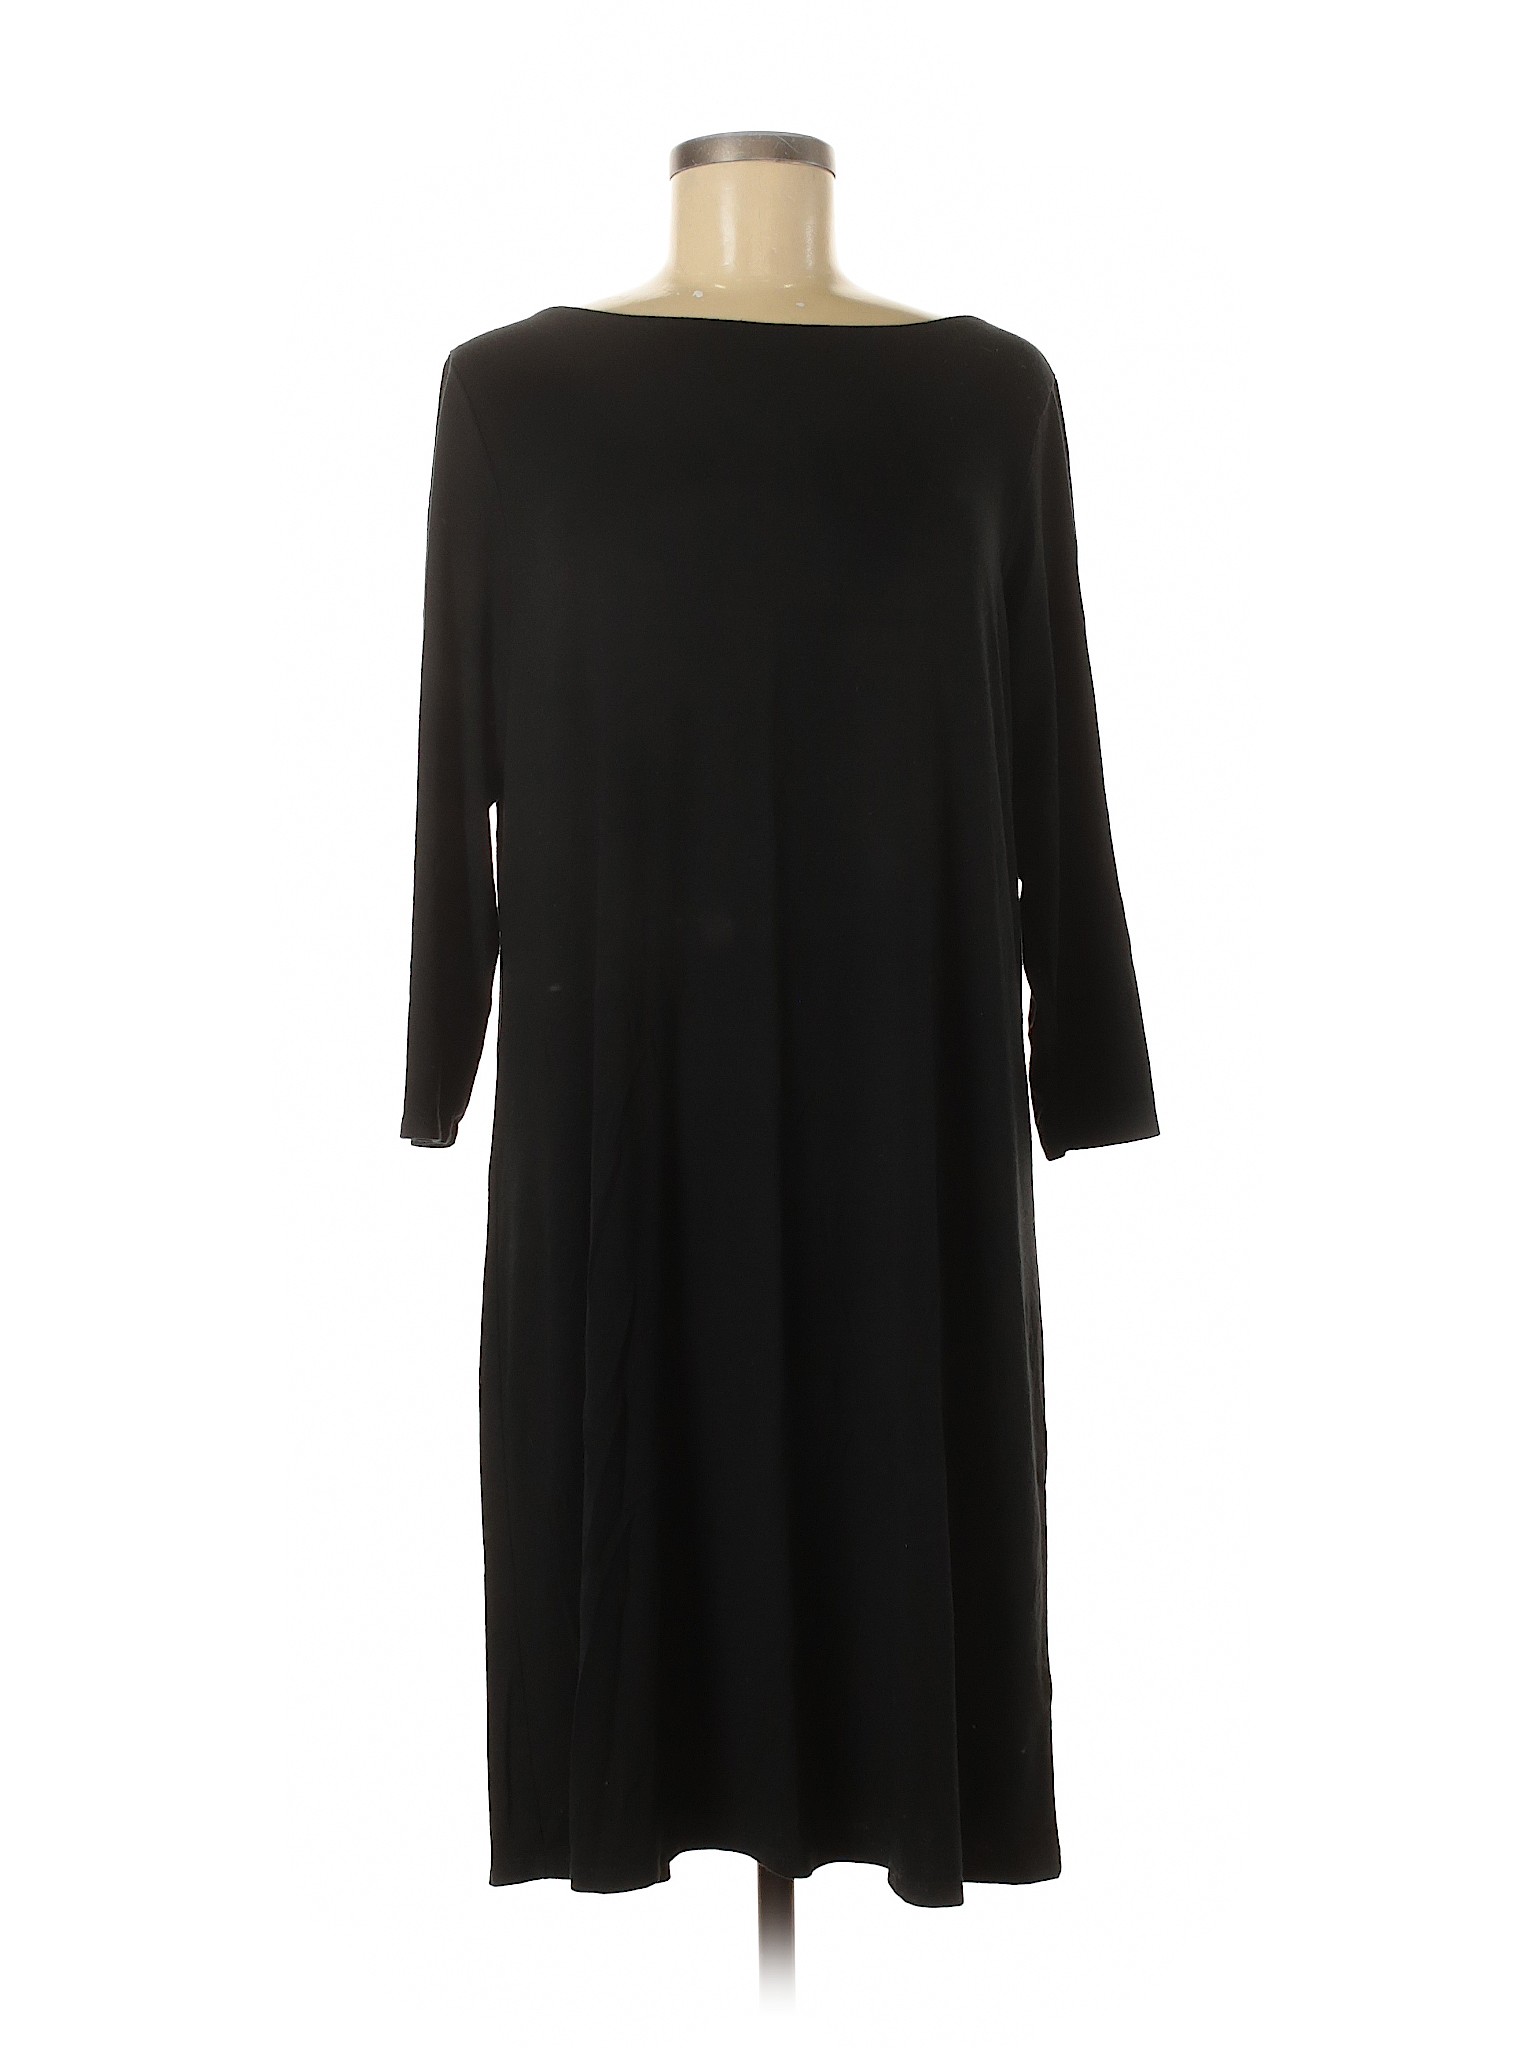 J.jill Women Black Casual Dress M | eBay